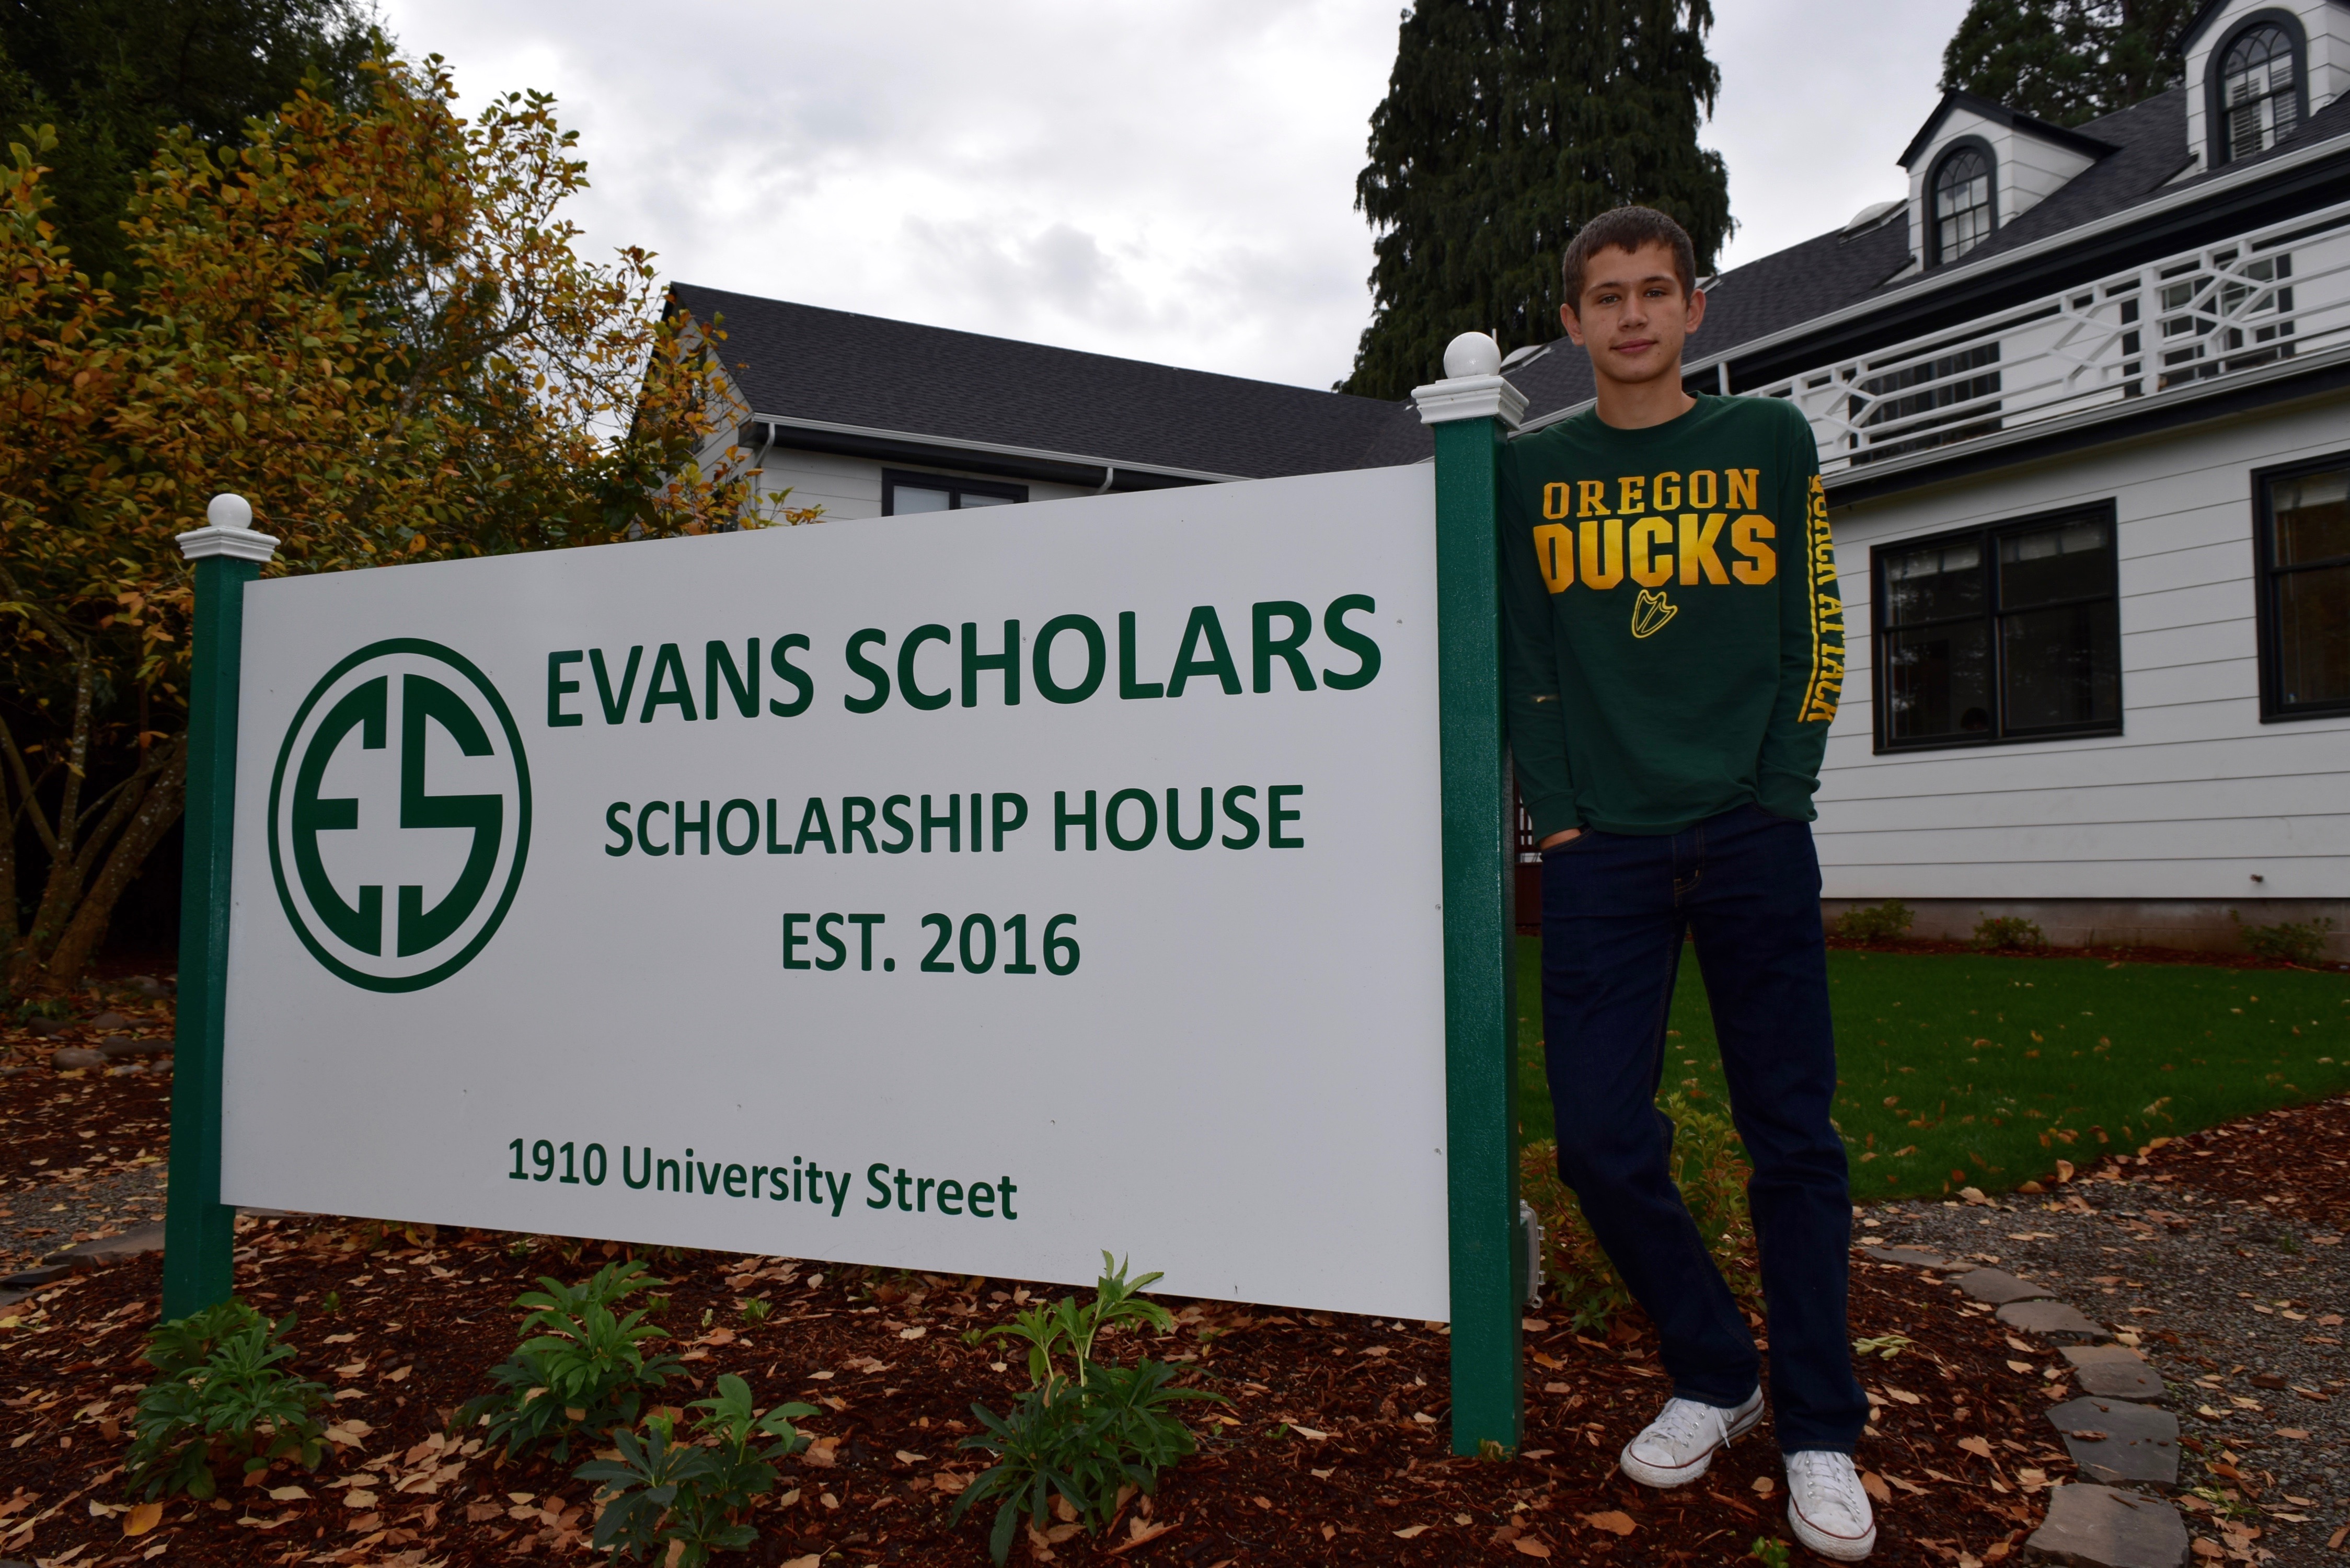 Evans Scholarship House: New home for Evans Scholars at University of Oregon